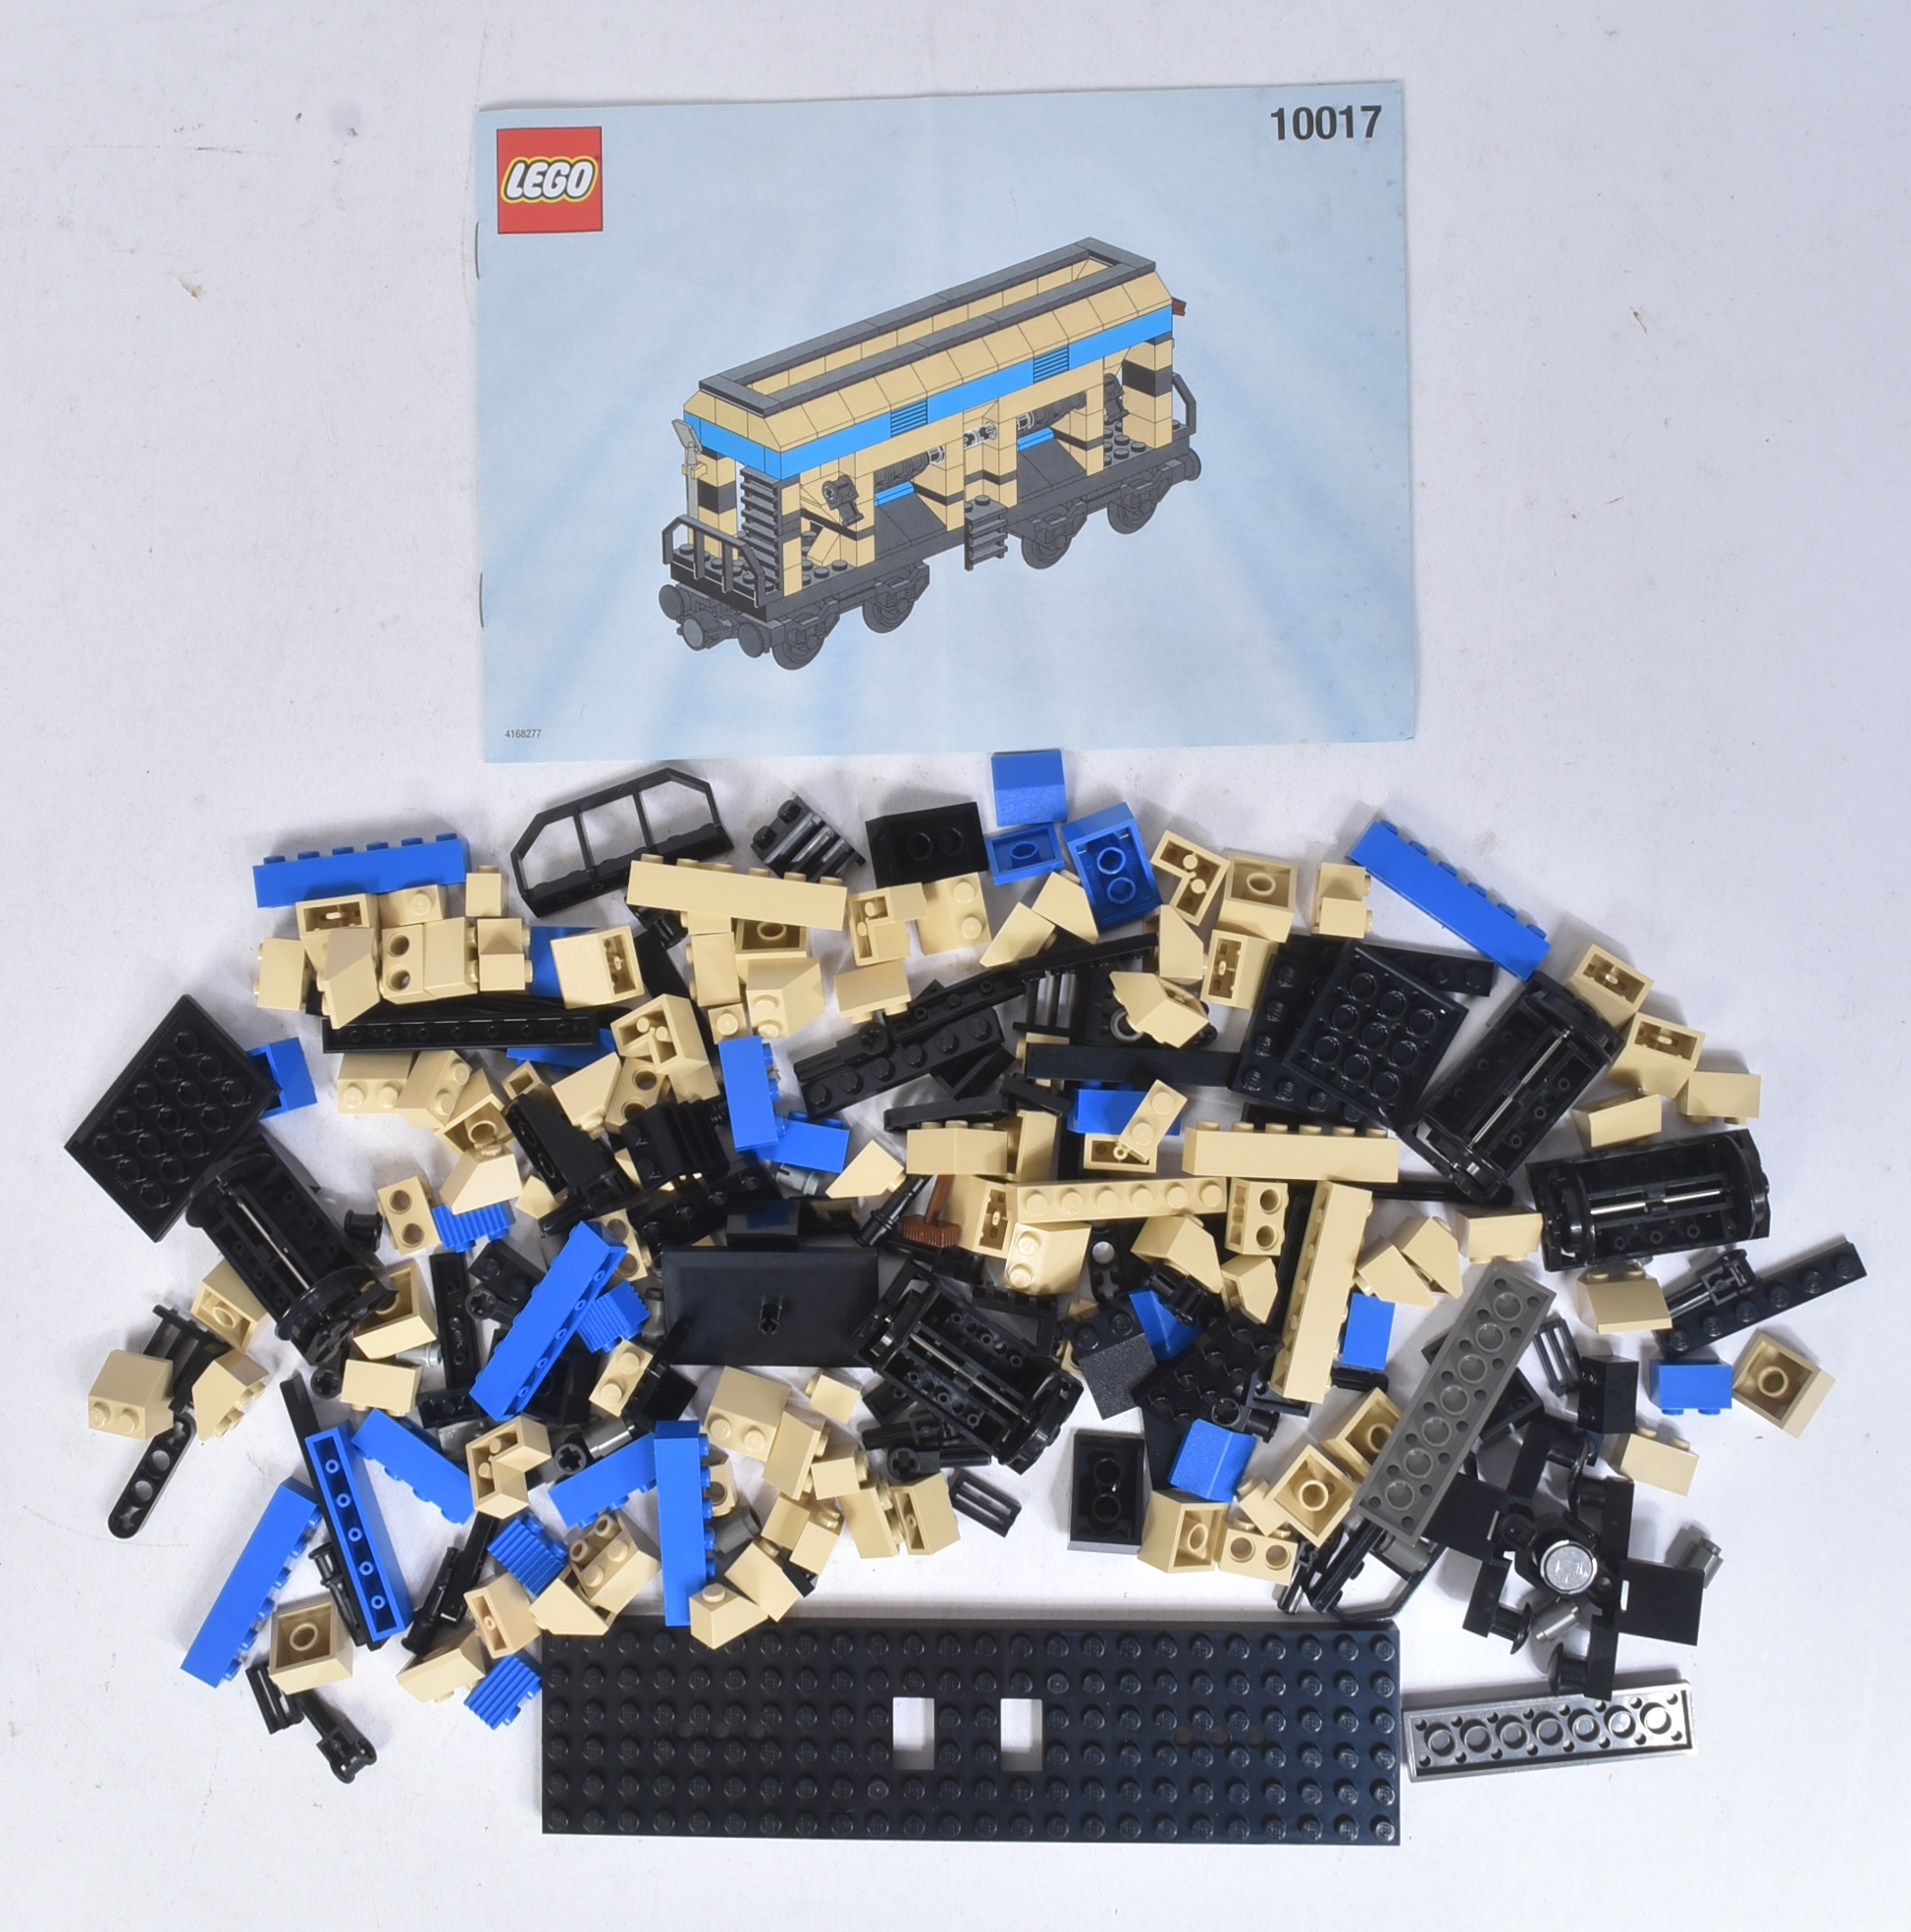 LEGO - TRAINS - 10017 - HOPPER WAGON - Image 3 of 3